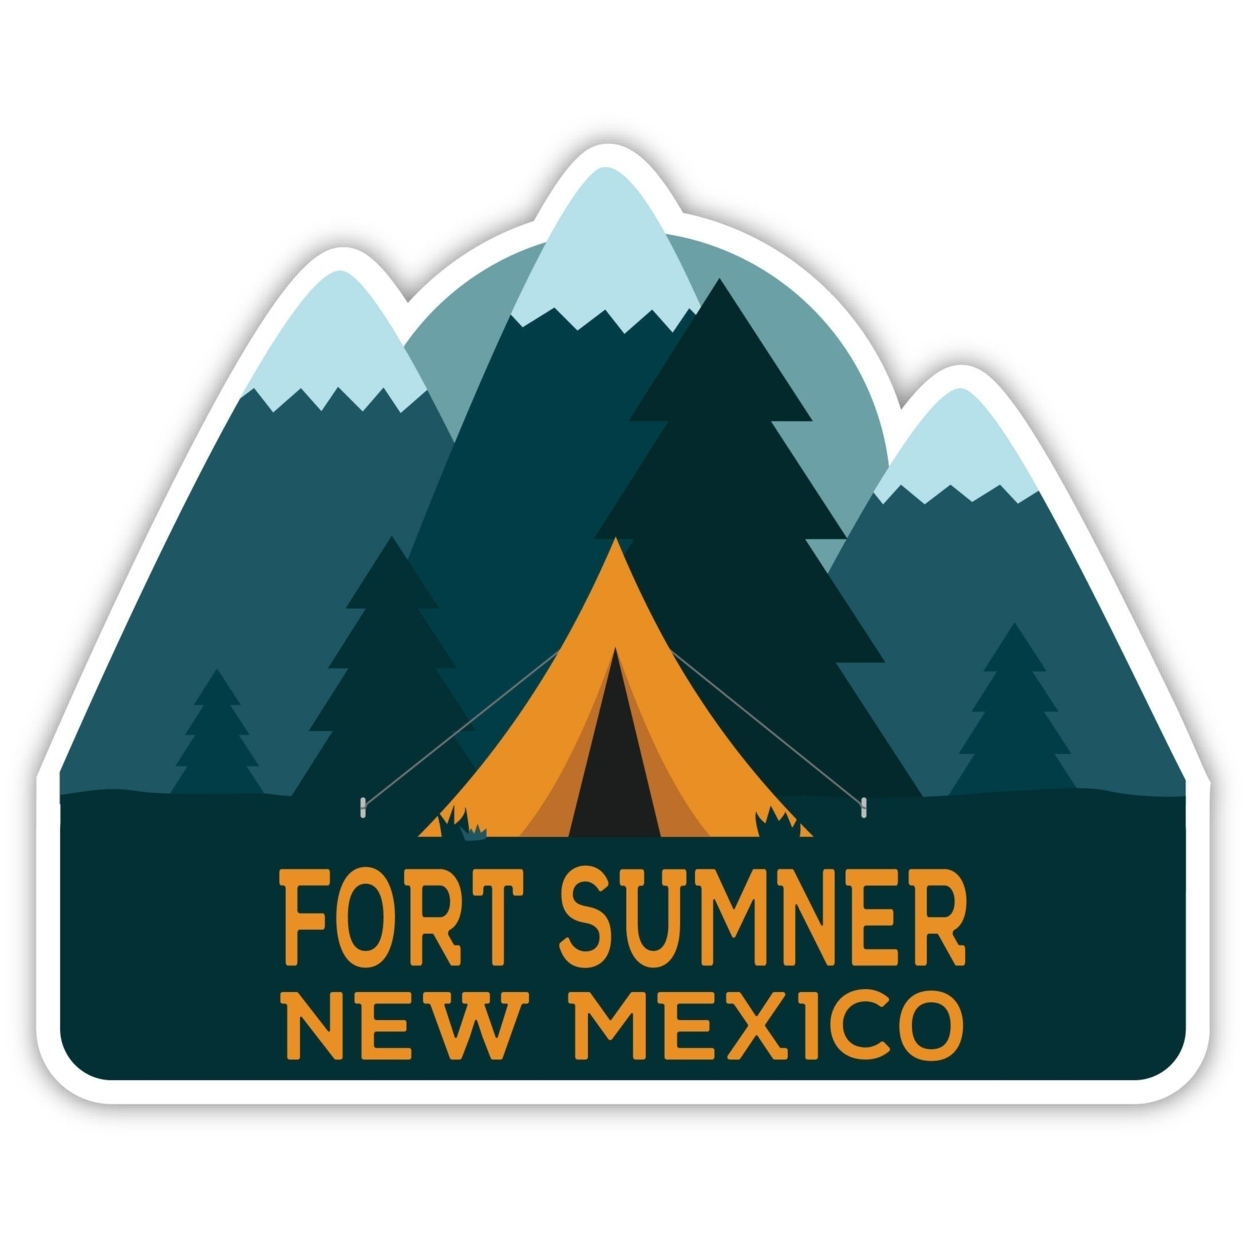 Fort Sumner New Mexico Souvenir Decorative Stickers (Choose Theme And Size) - Single Unit, 8-Inch, Tent